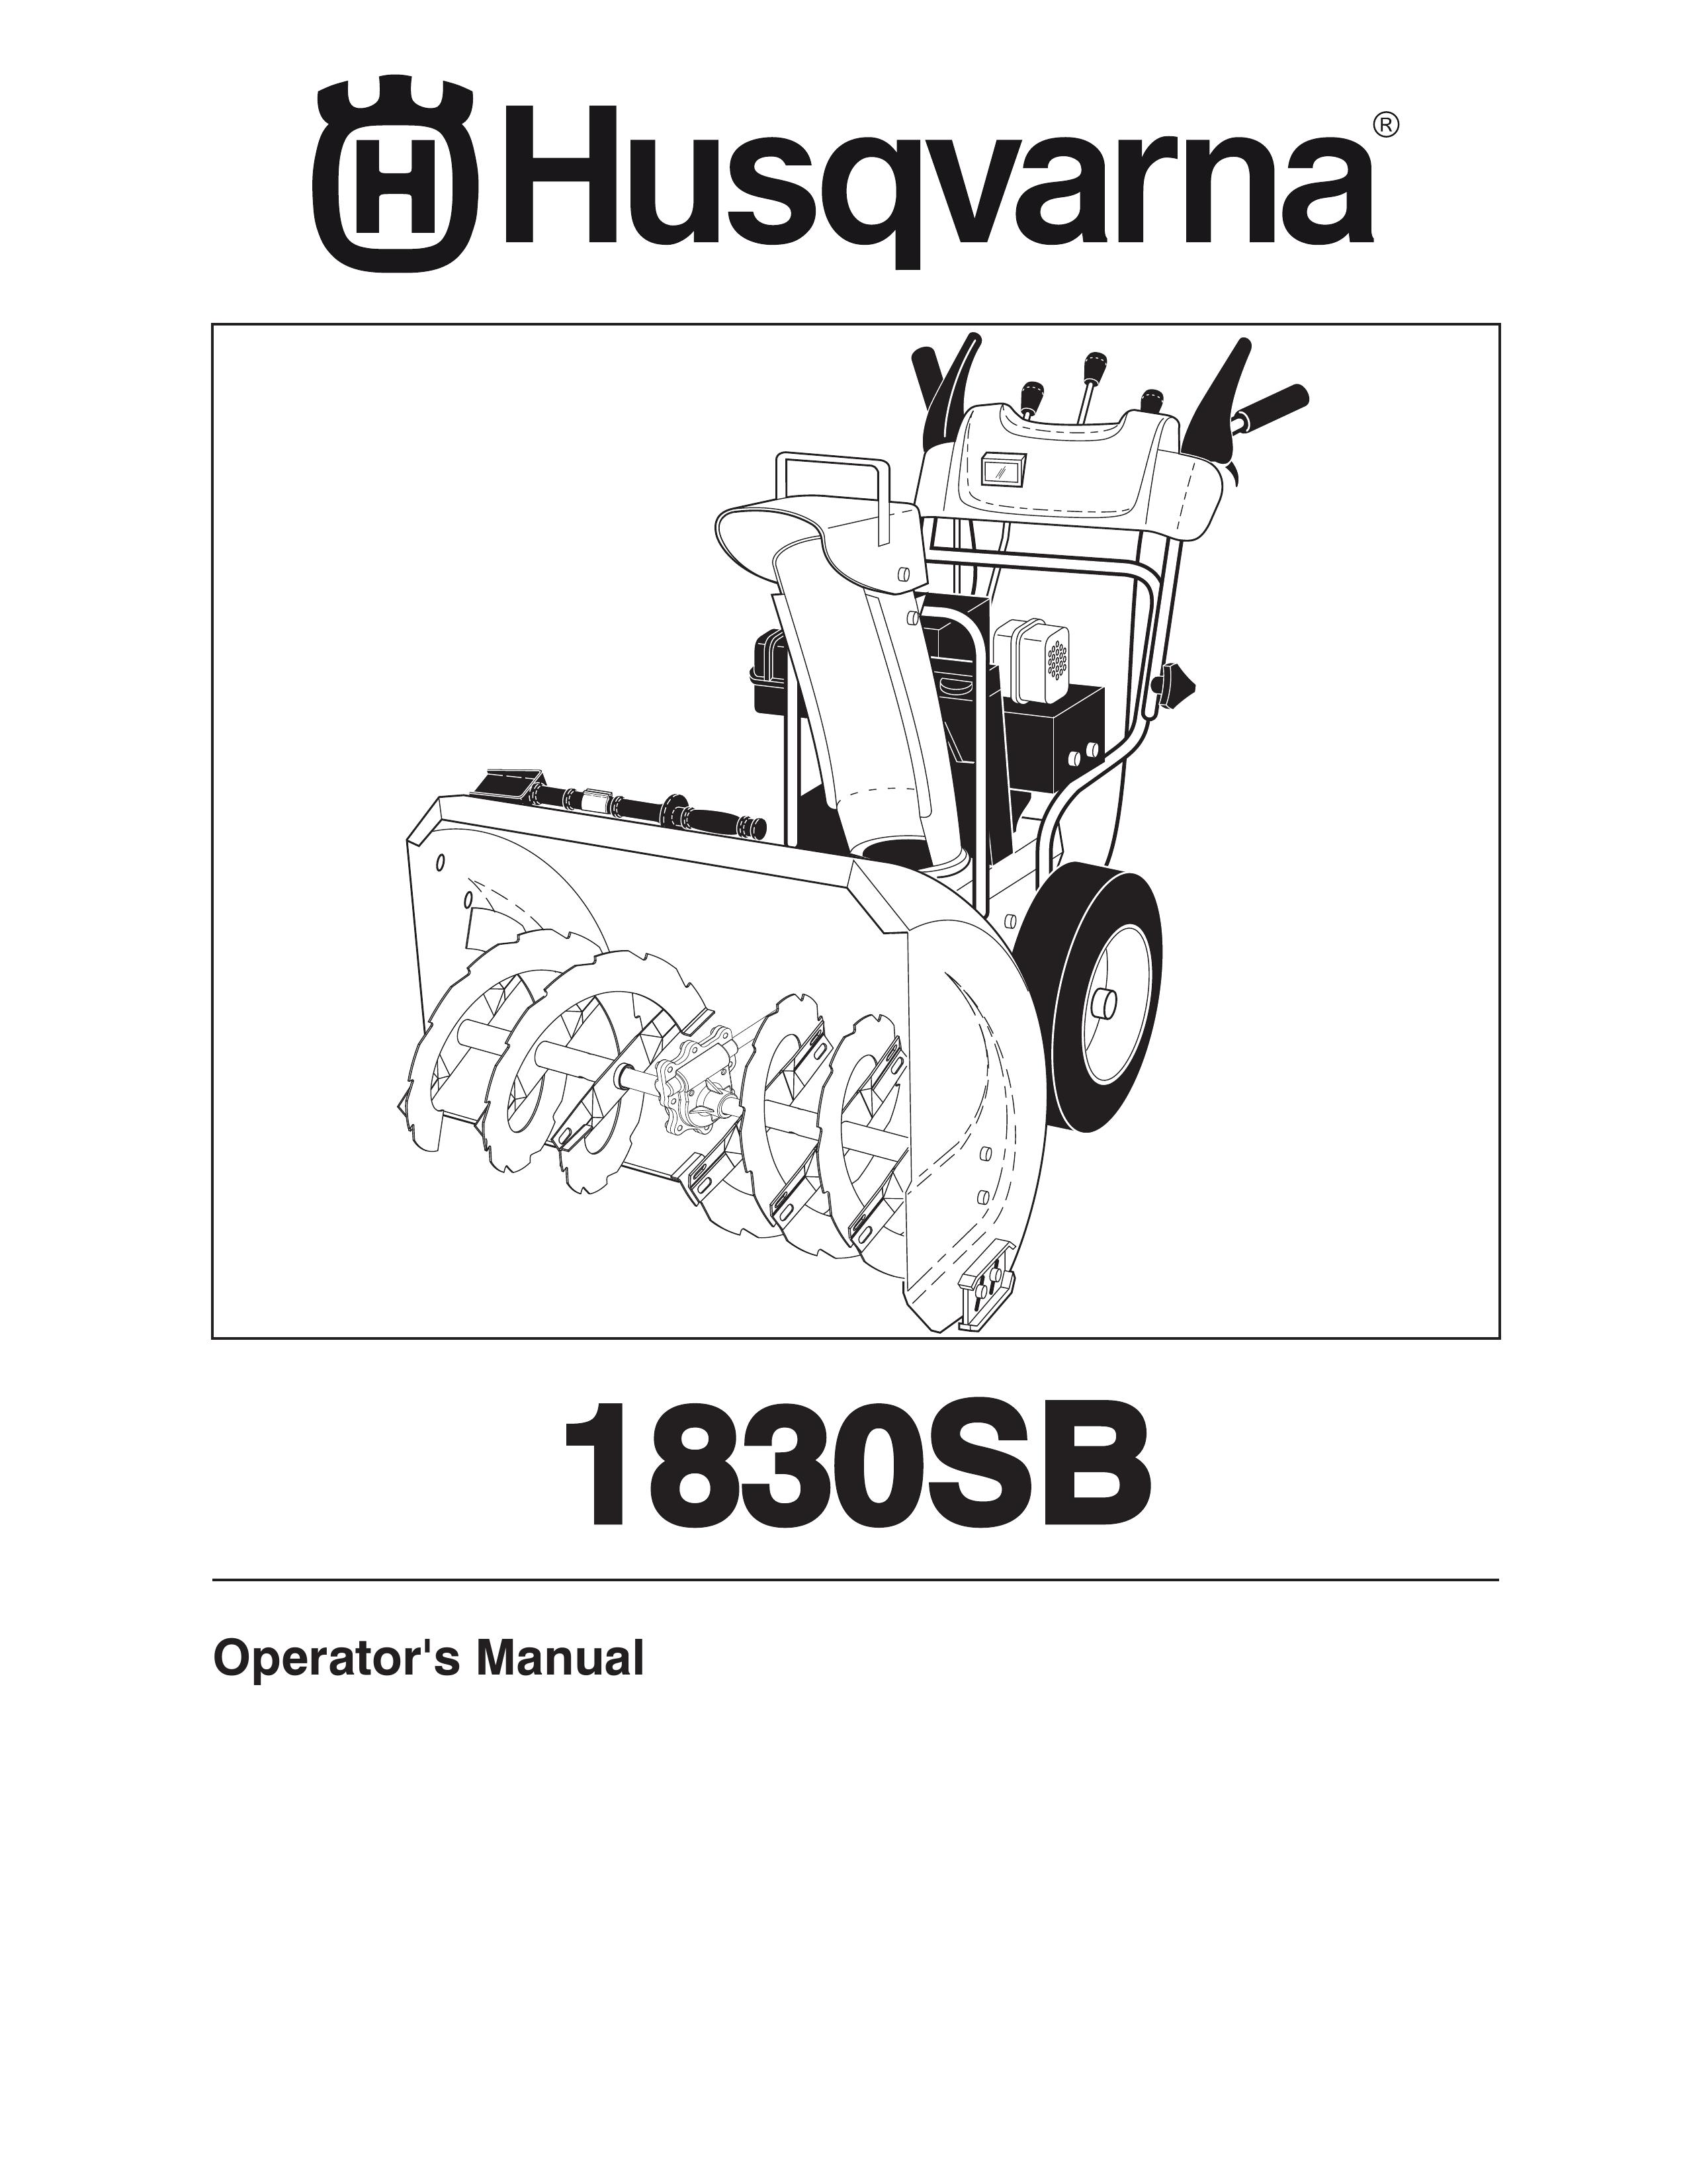 Husqvarna 1830SB Snow Blower User Manual